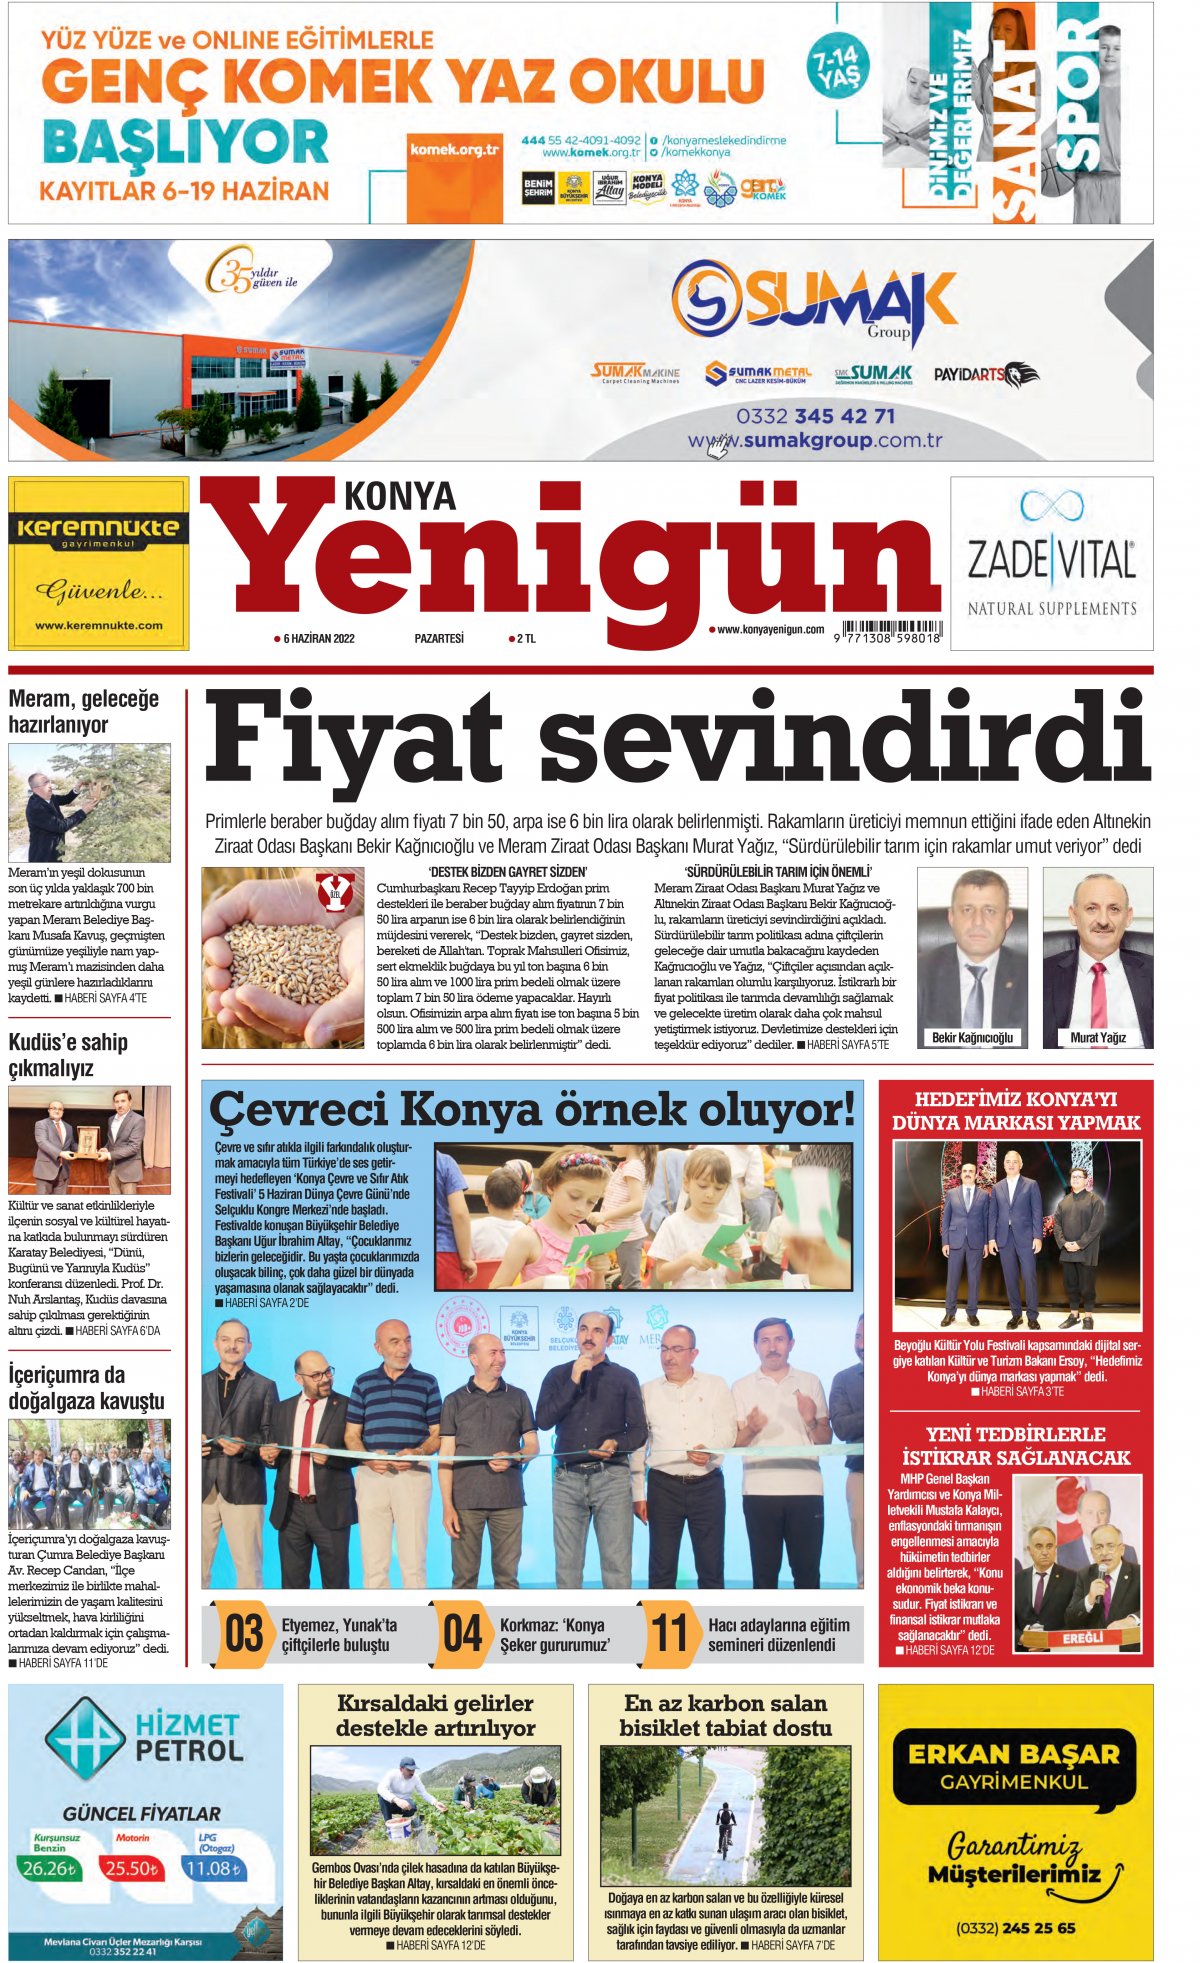 Konya Yenigün Gazetesi - 06.06.2022 Manşeti